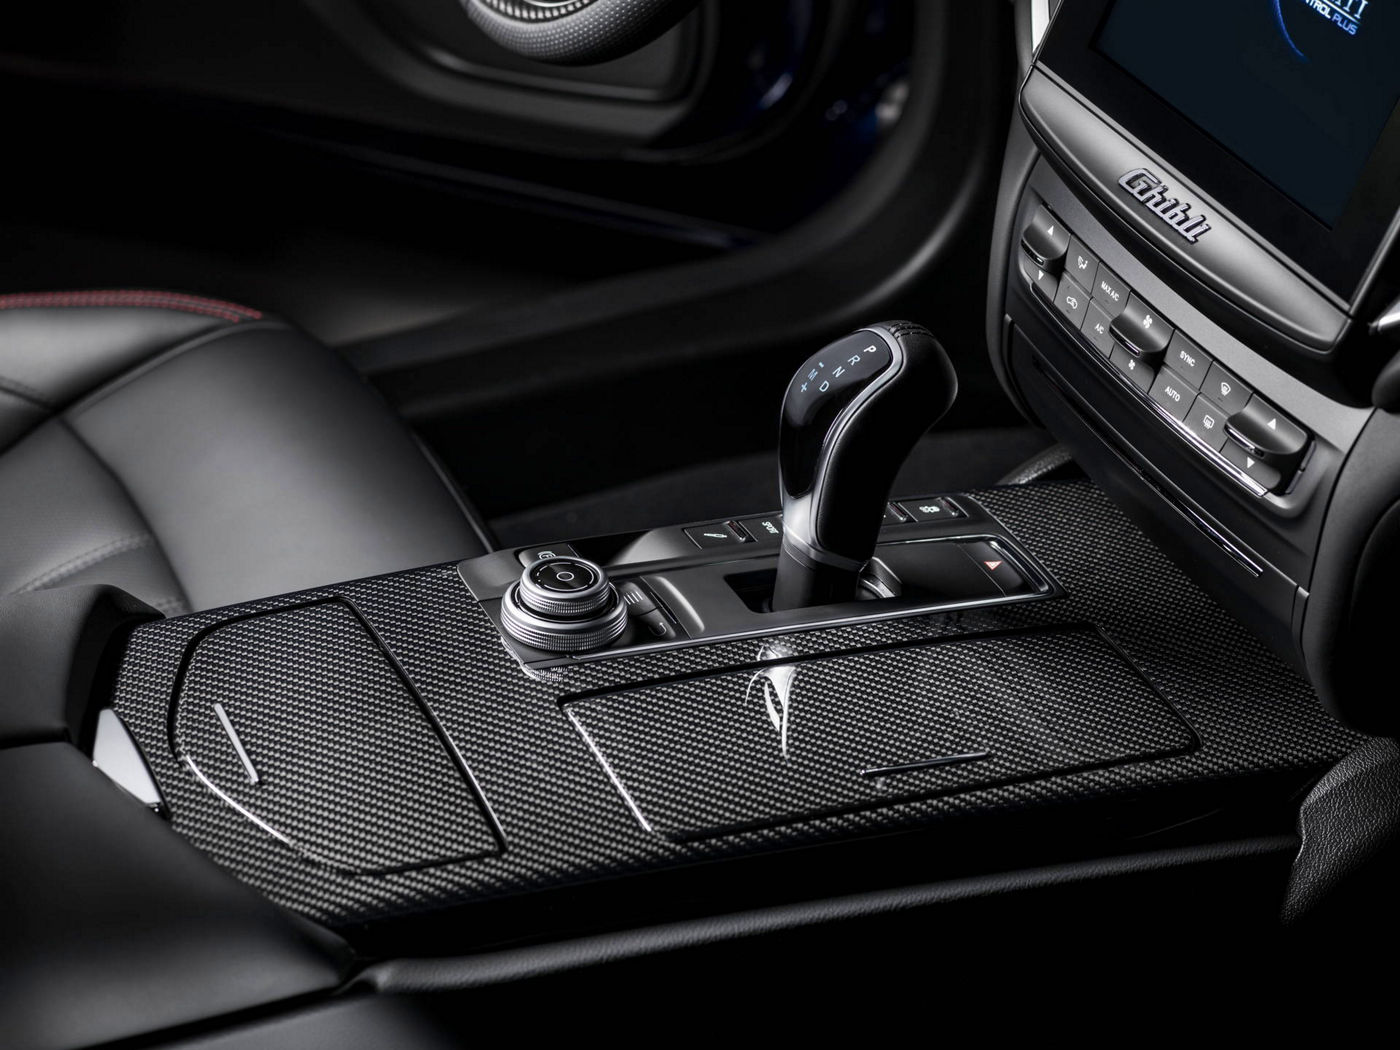 Maserati Ghibli interior details, ZF eight-speed automatic transmission